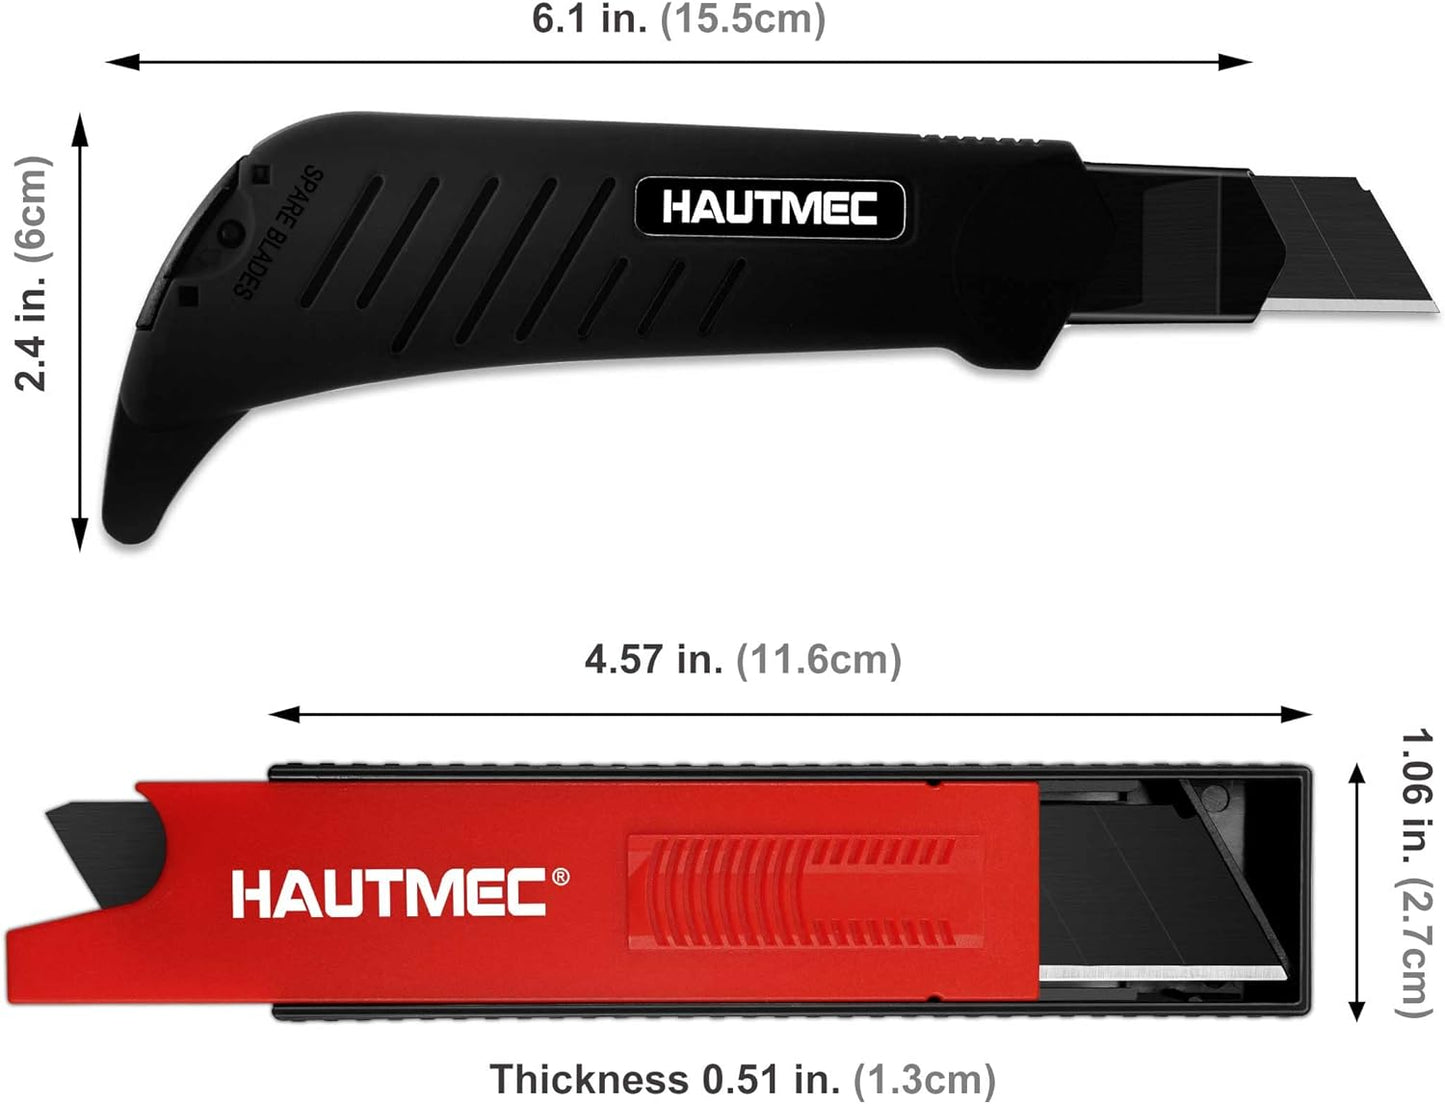 HAUTMEC 18mm Heavy Duty Utility Knife with Multi-Pick and 10pcs Blade set, Snap Off Ultra-Sharp Black Retractable Box Cutter, Ratchet & Soft-grip Cutter HT0249-KN